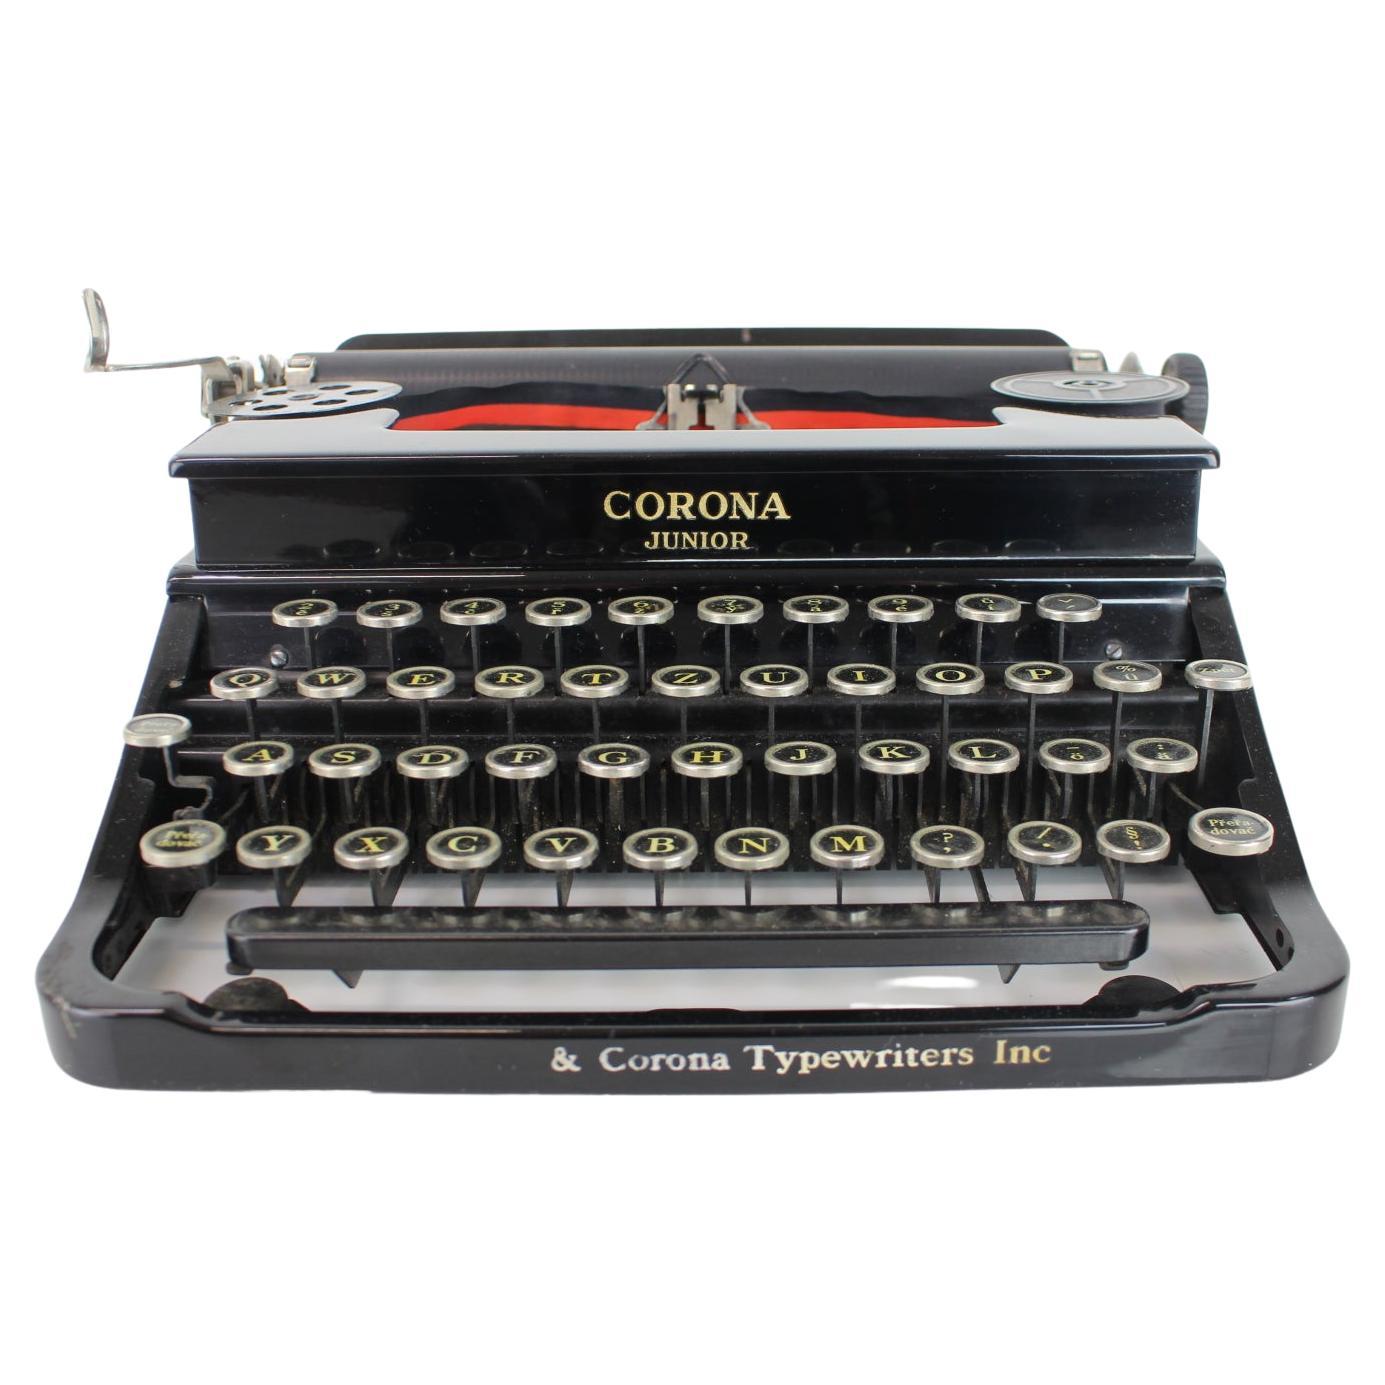 Portable Typewriter Corona Junior, U.S.A. circa 1395